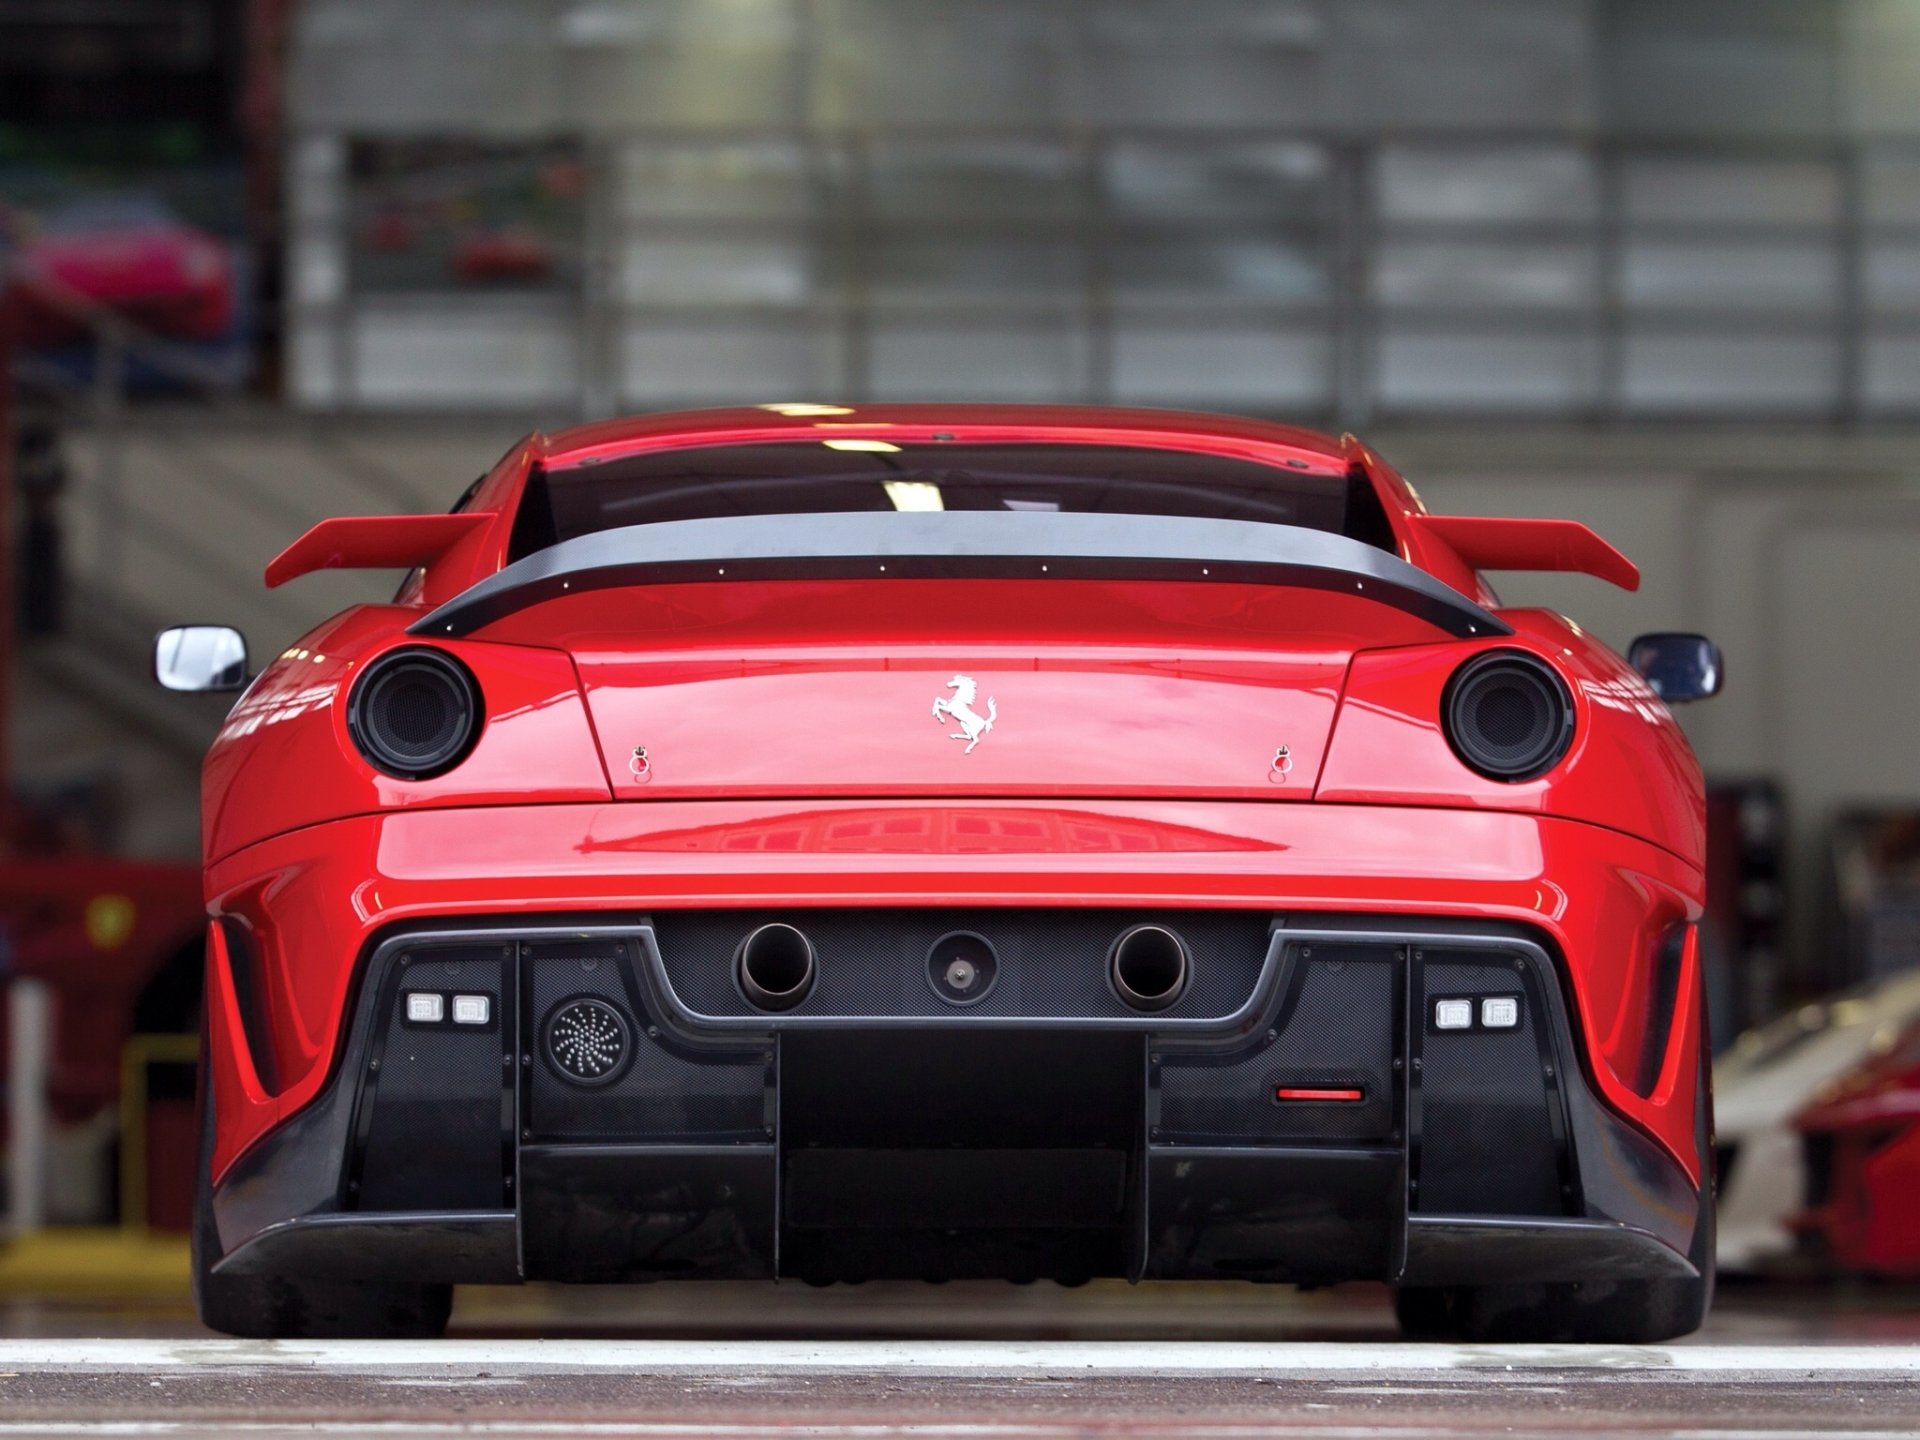 Ferrari 599Xx HD Wallpaper and Background